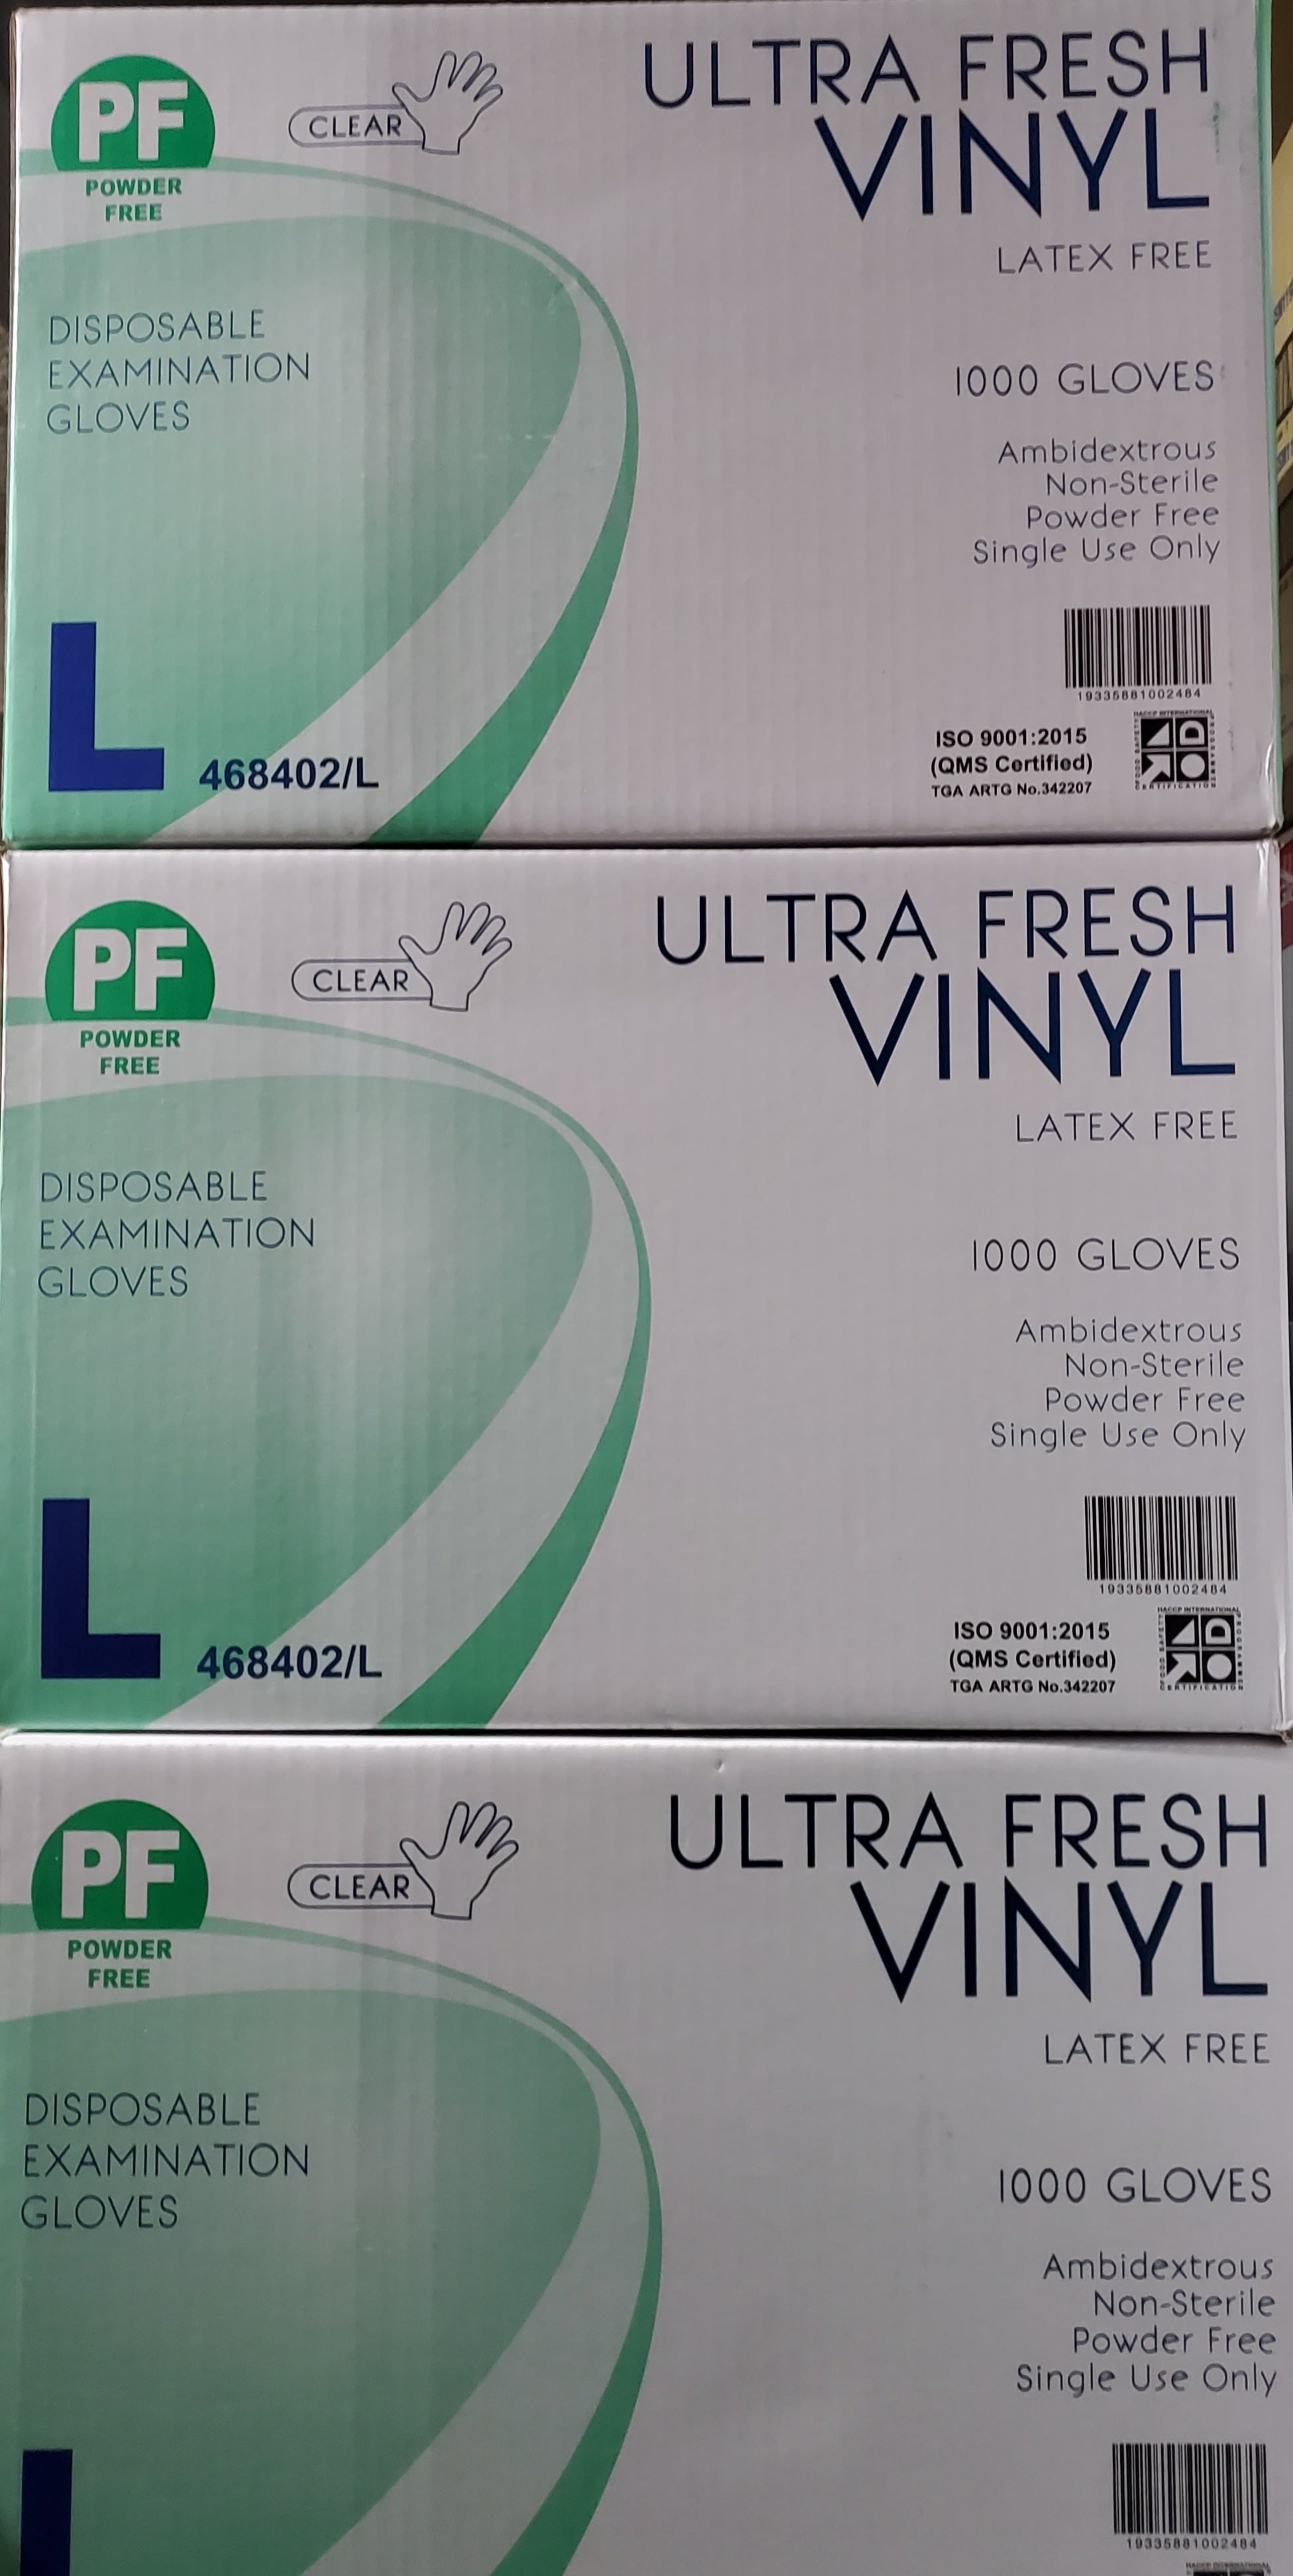 Ultra Fresh Disposable Vinyl Powder Free Gloves 100pcs